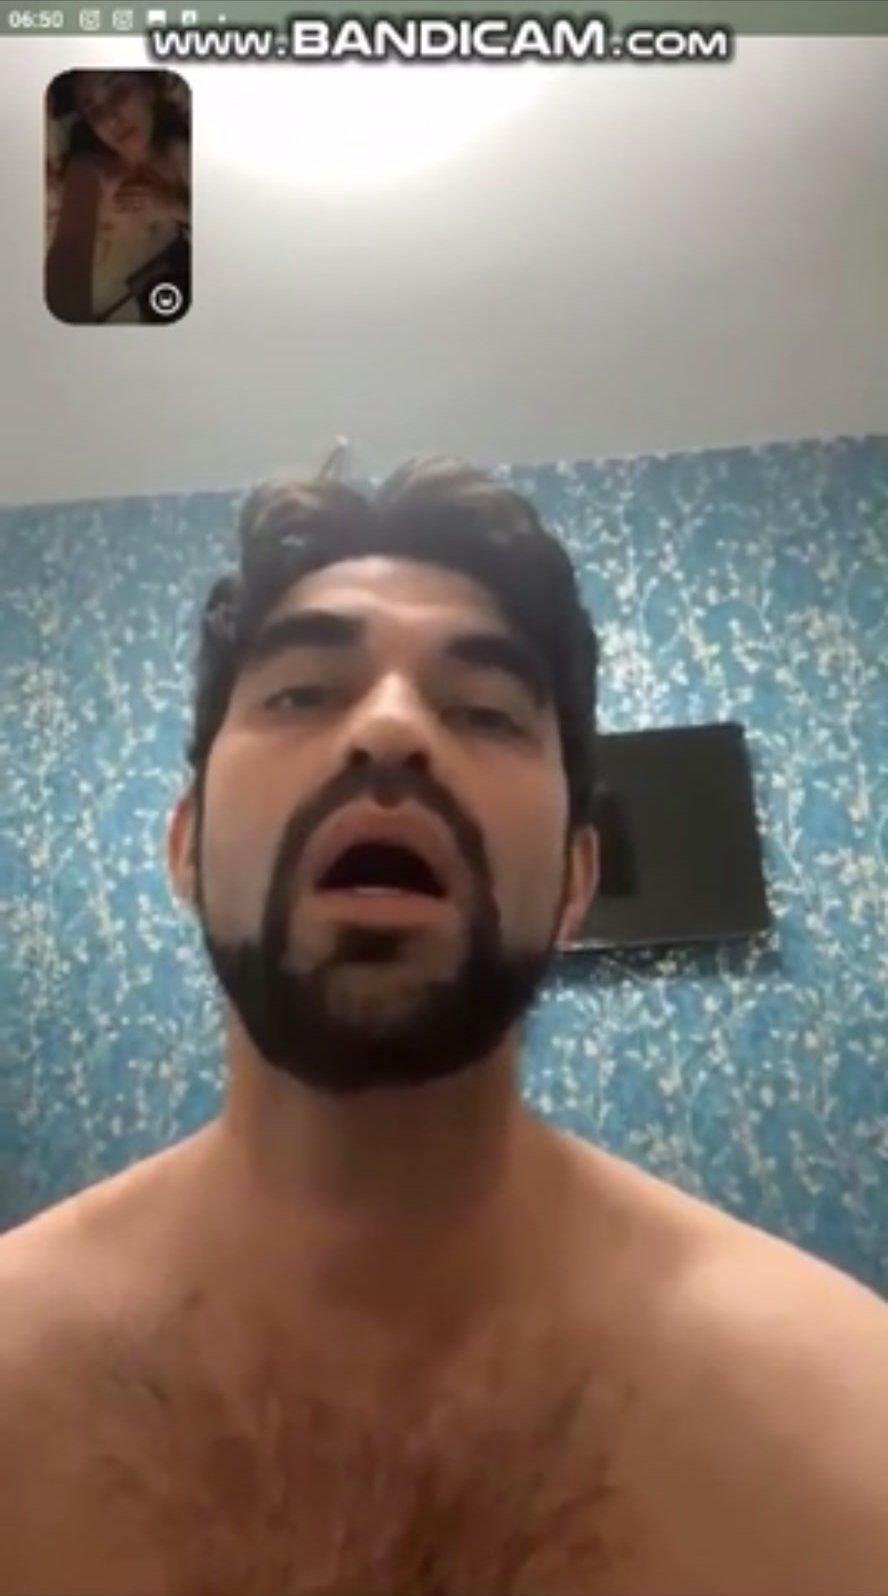 Naked Pakistani Girls In Florida - Pakistani guy baited - video 20 - ThisVid.com